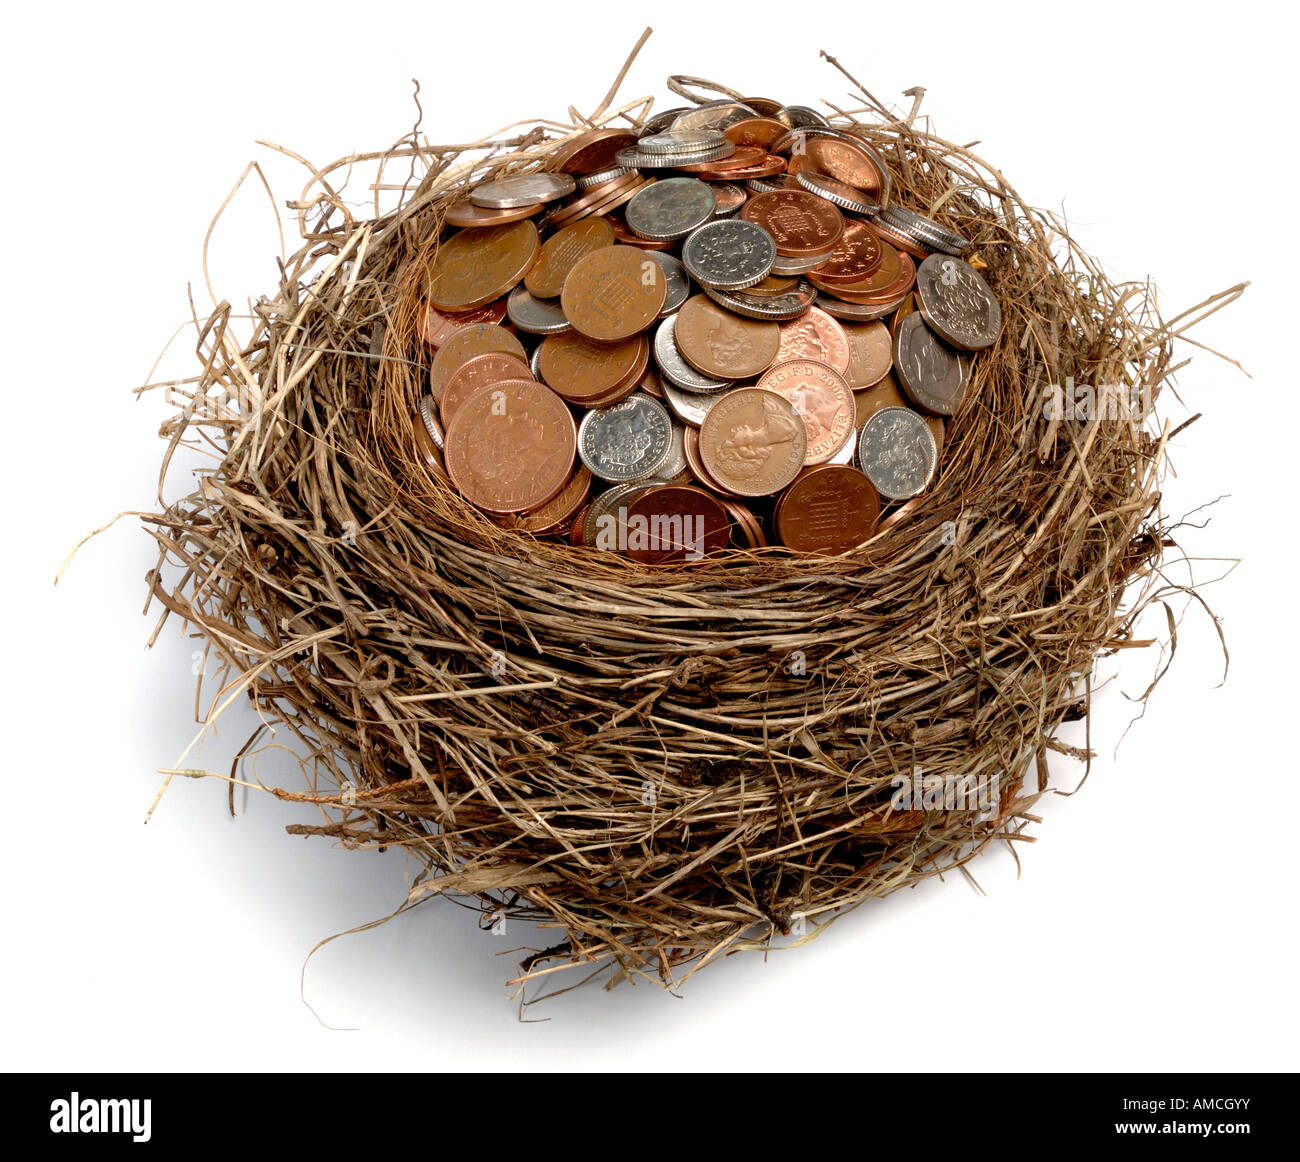 Bird nest full of money Stock Photo